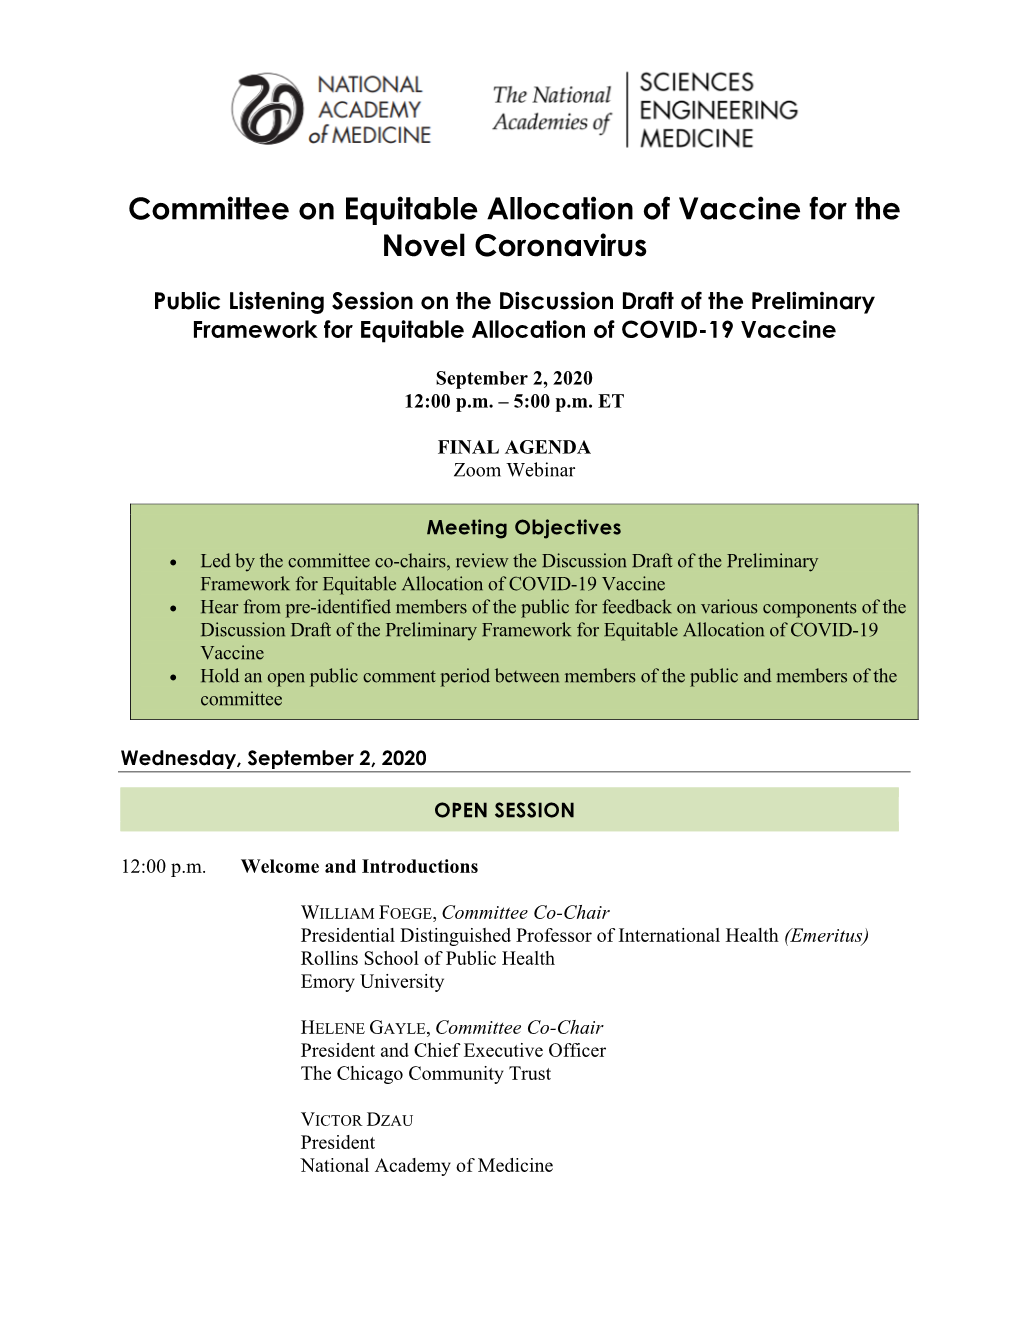 Committee on Equitable Allocation of Vaccine for the Novel Coronavirus